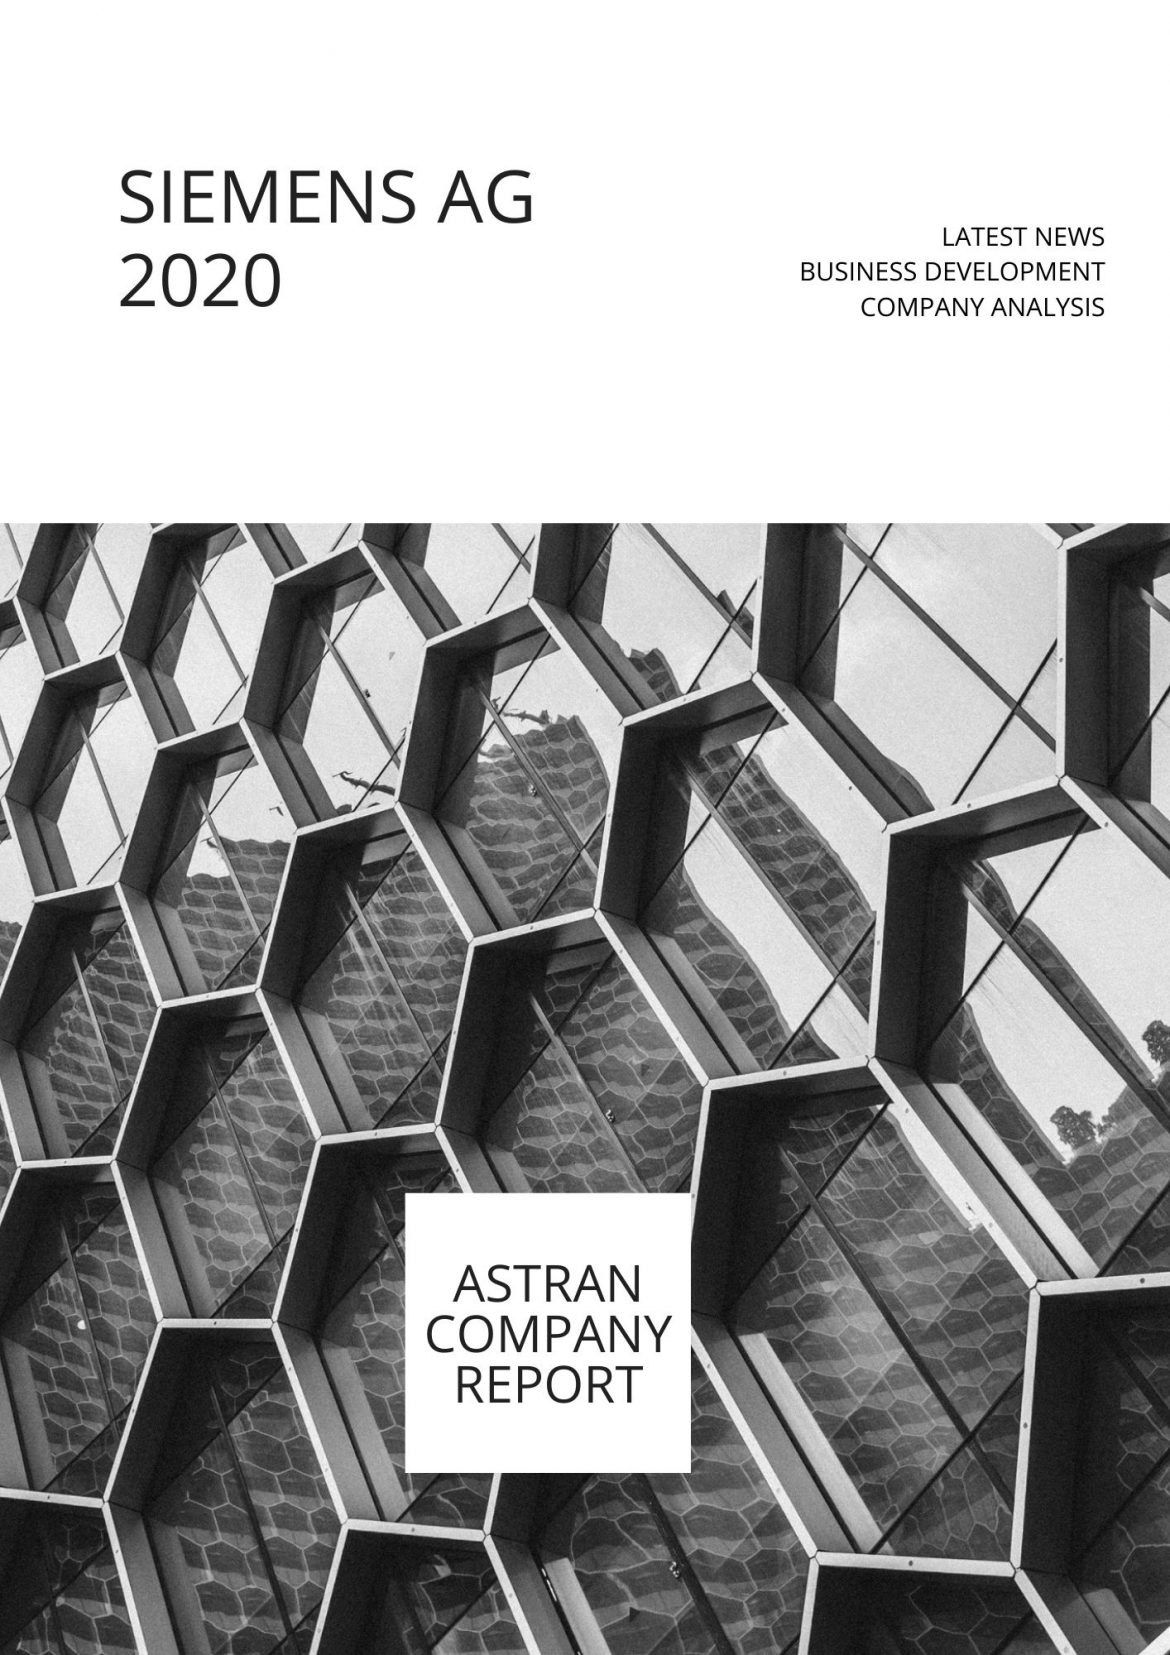 Company Report & Profile Siemens AG 2020